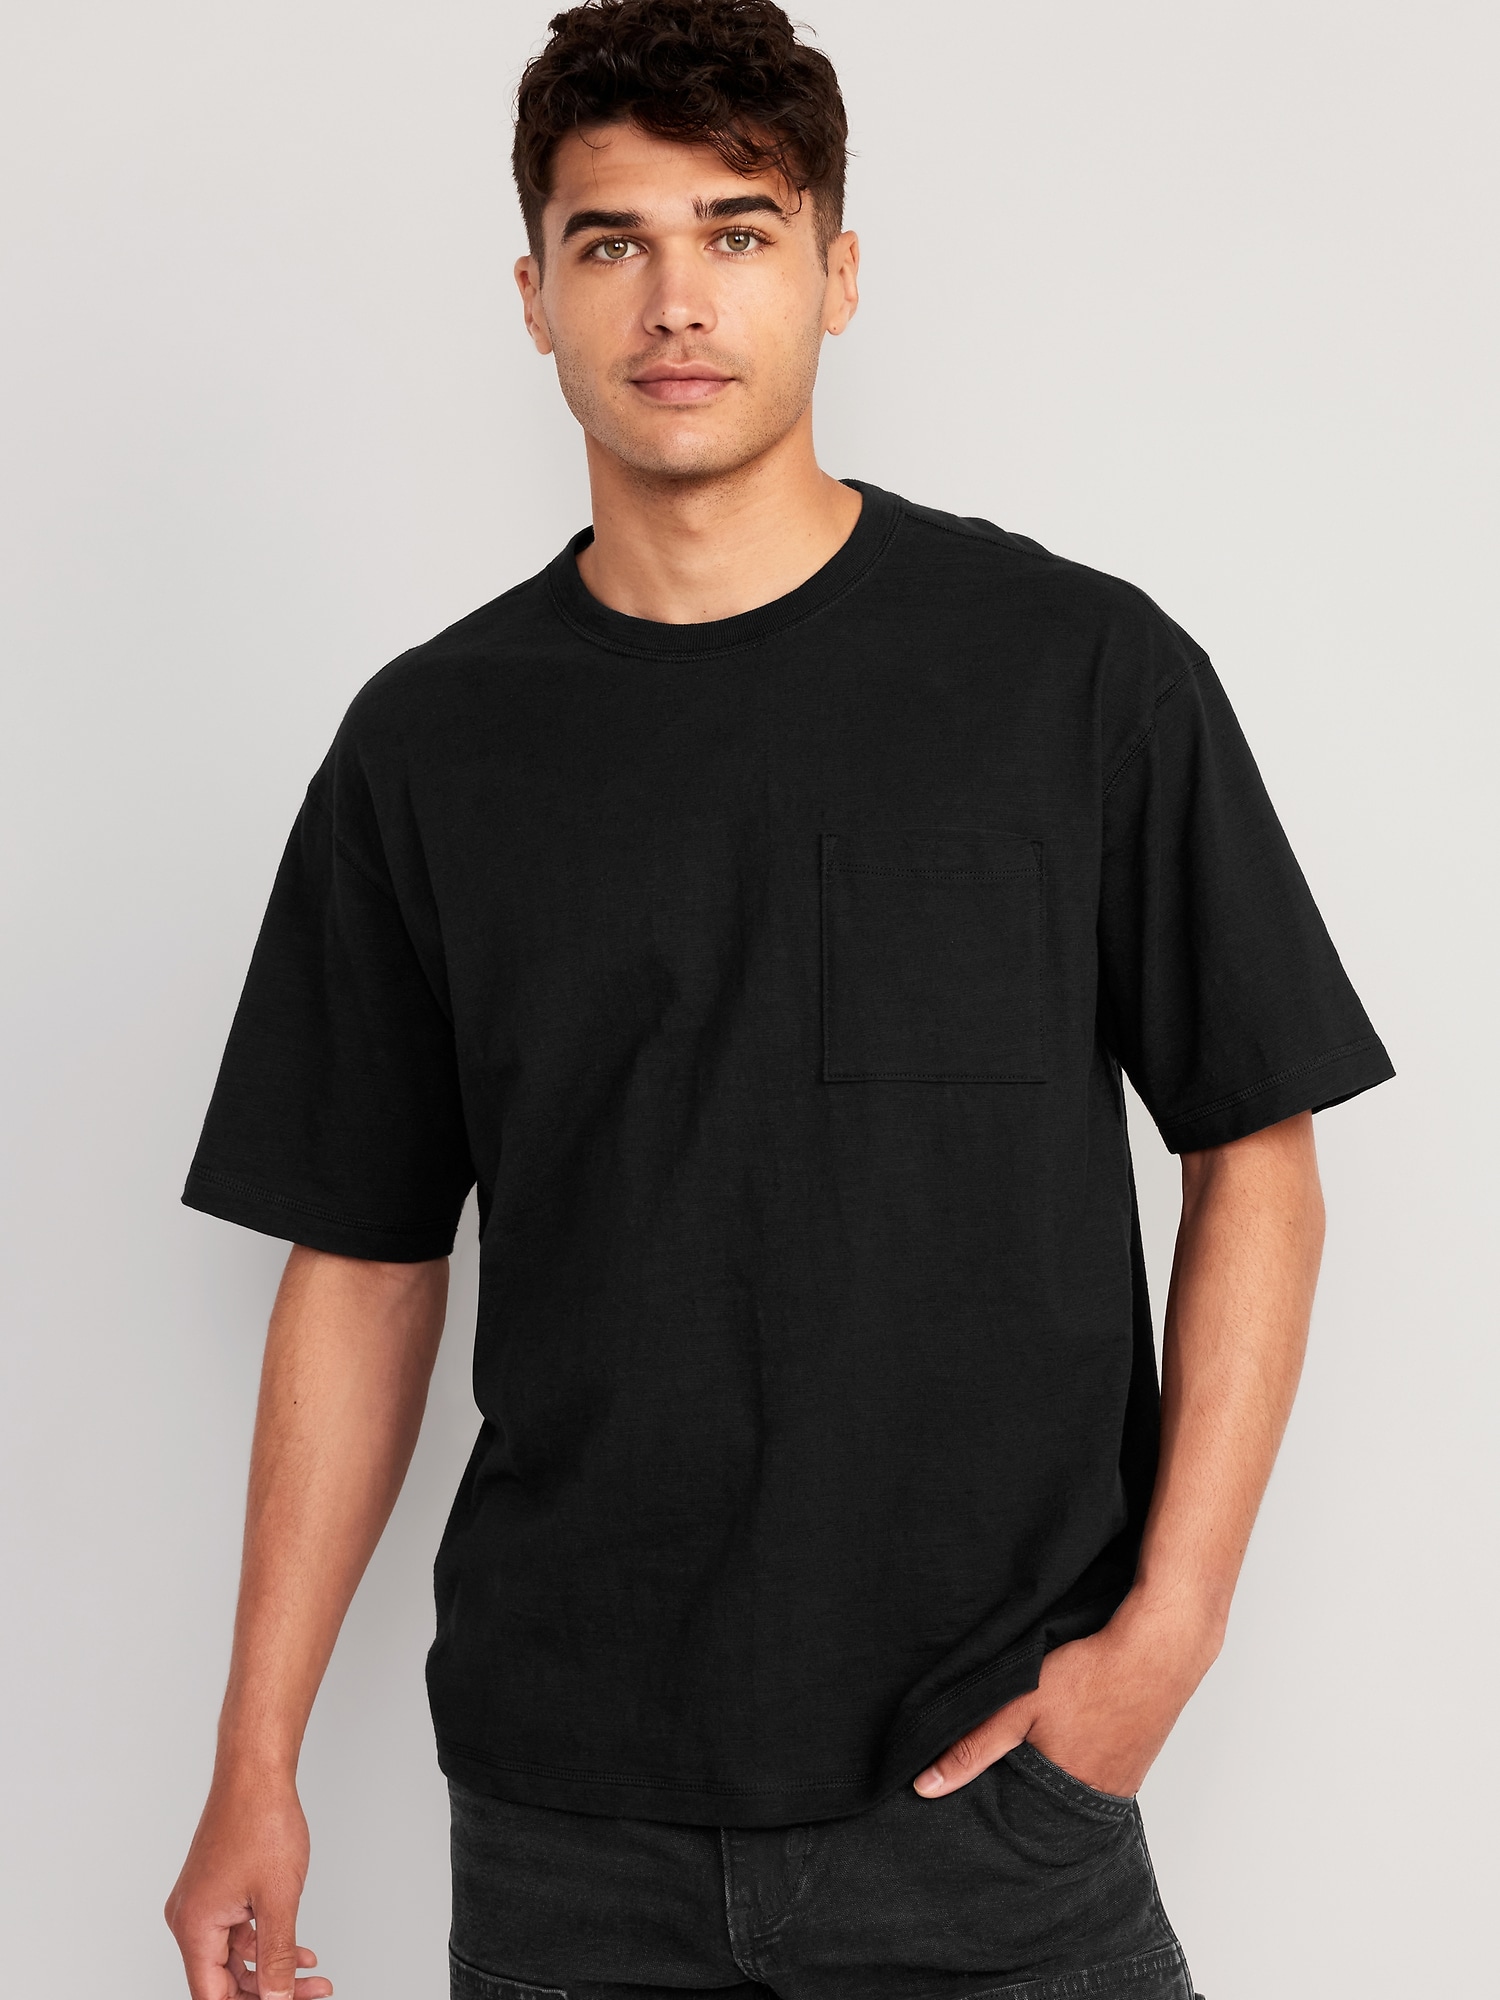 Slub-Knit Pocket T-Shirt for Men Navy | Old